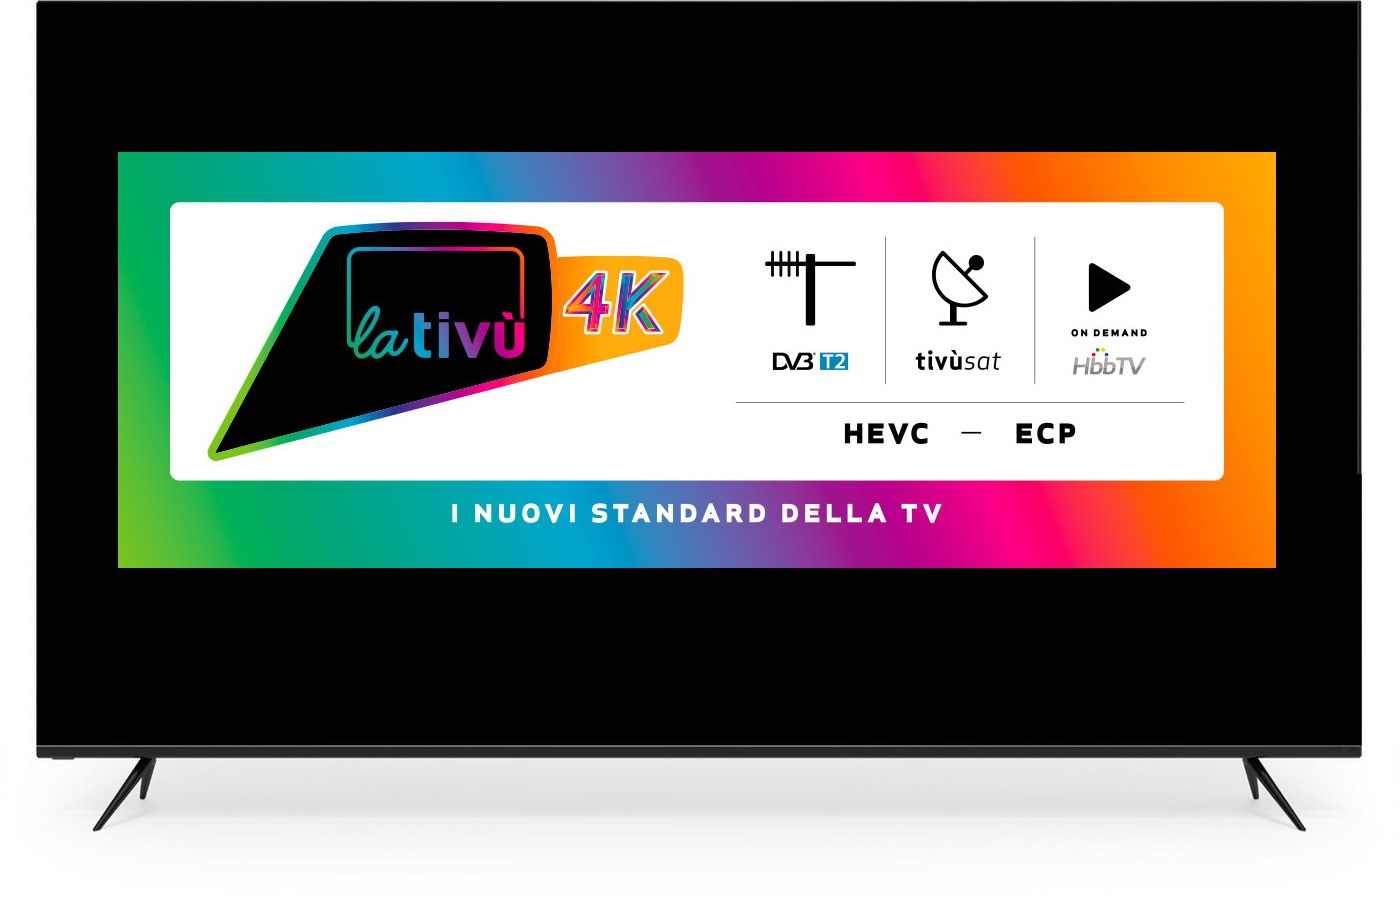 Tv certificato tivùsat con bollino LaTivù4K